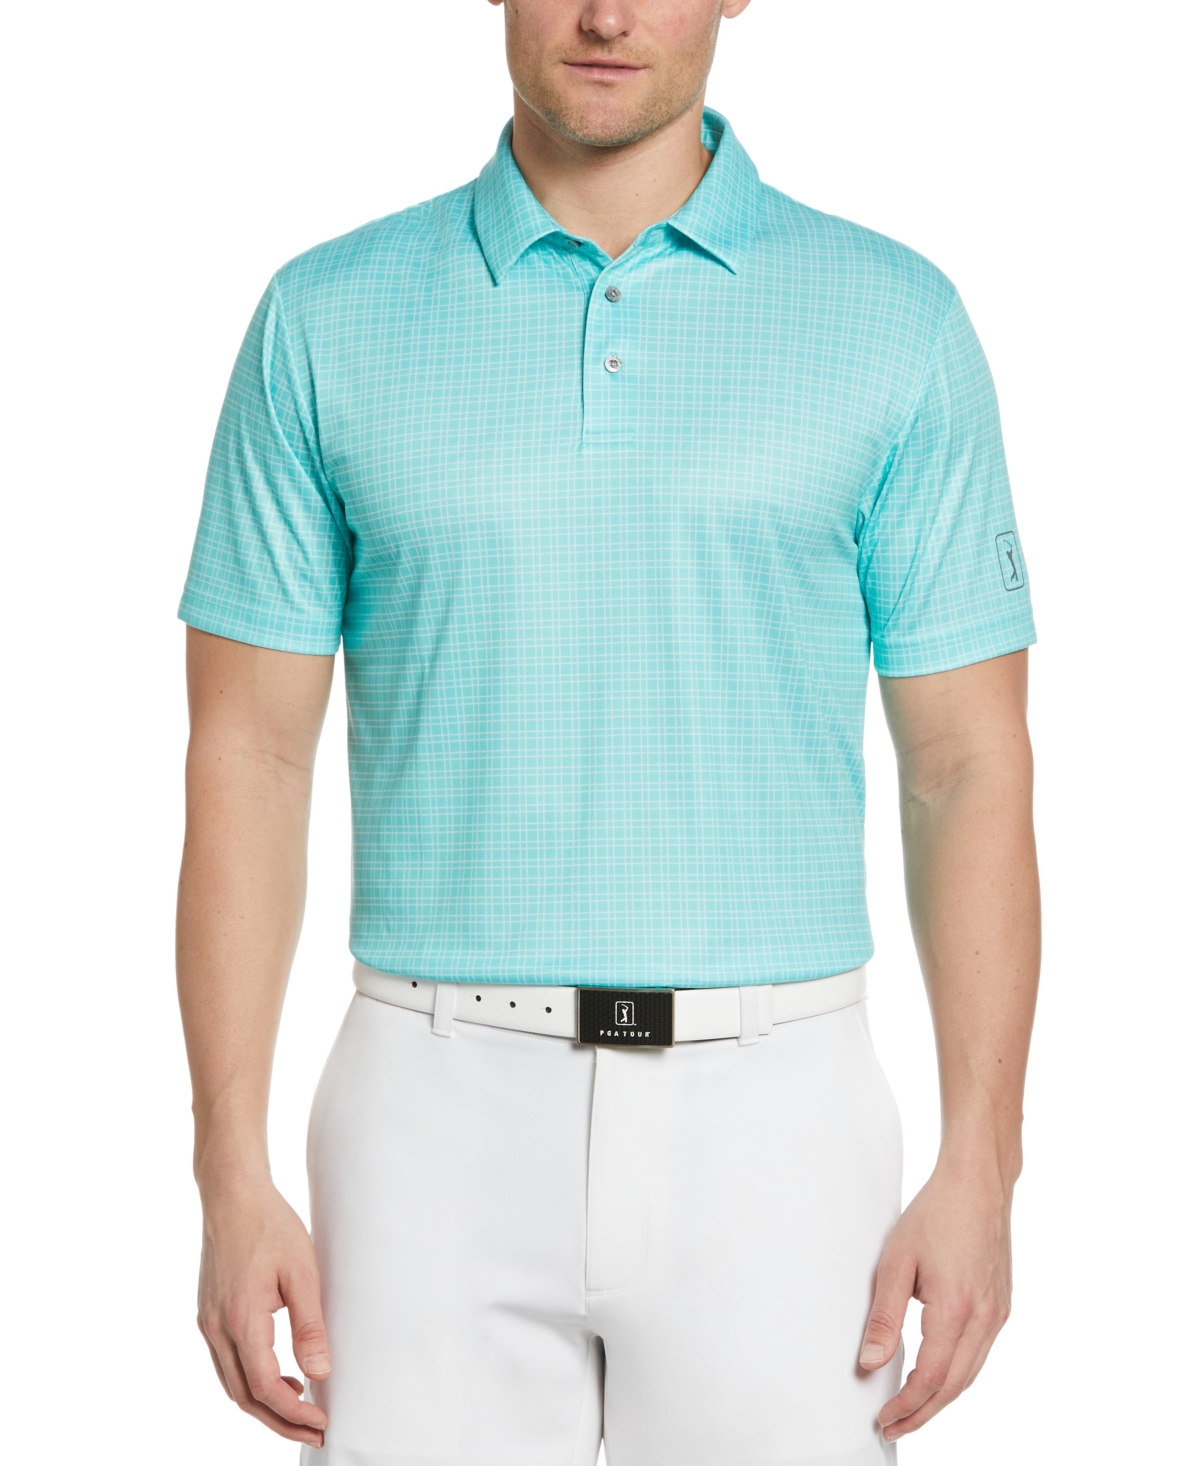 Men's Check Print Short-Sleeve Golf Polo Shirt - Cockatoo